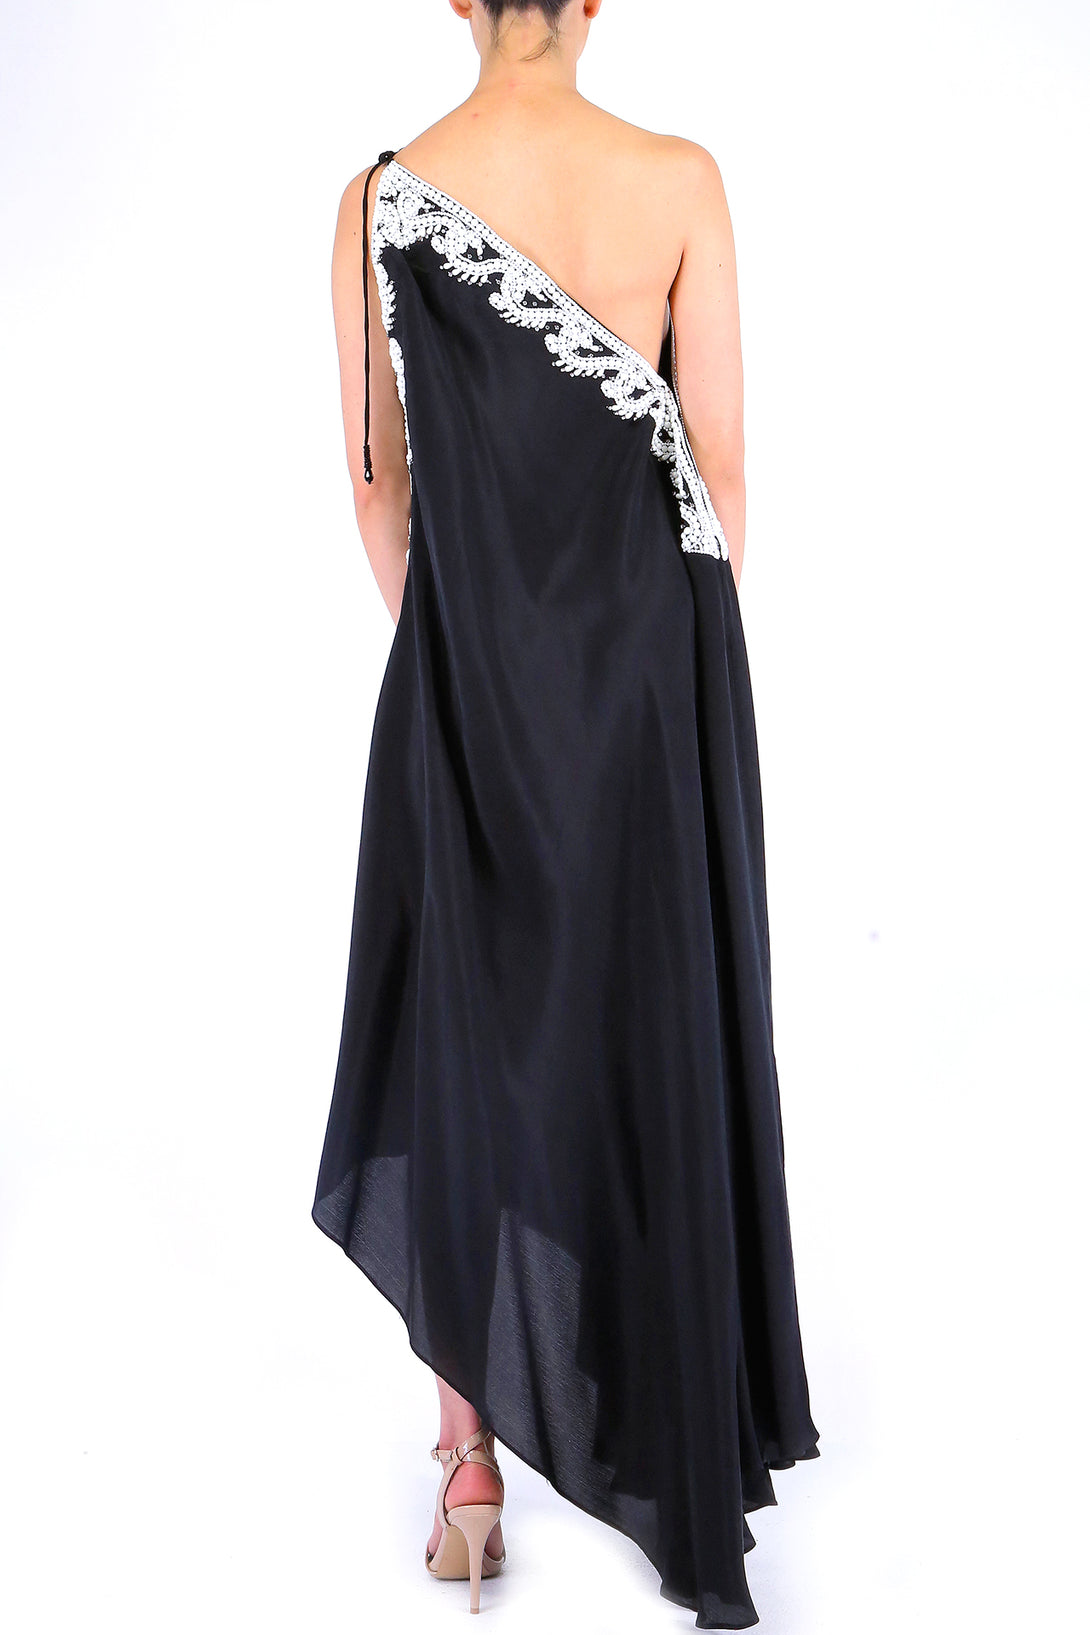  long black maxi dress, formal dresses for women, Shahida Parides, plunging neckline cocktail dress,